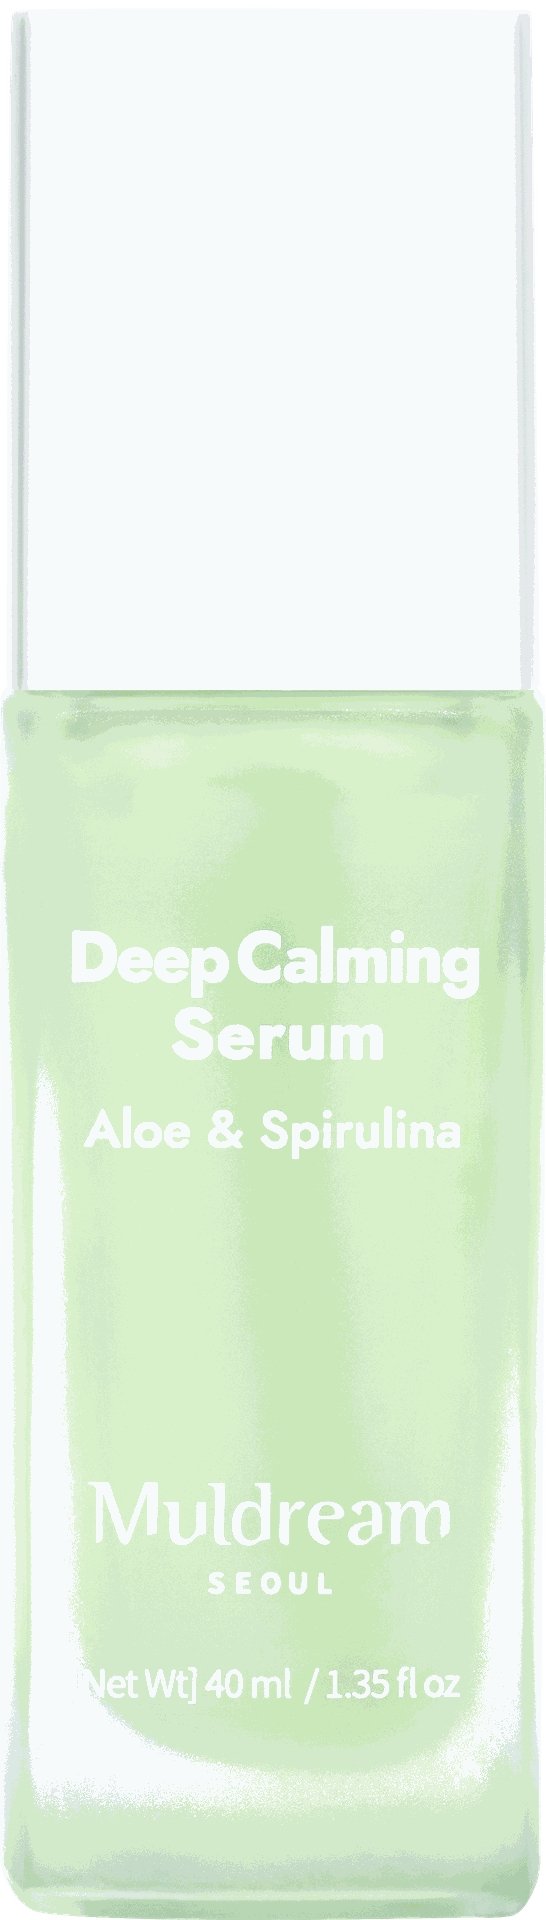 Serum Muldream Deep Calming Serum-Aloe, Spirulina 40ml